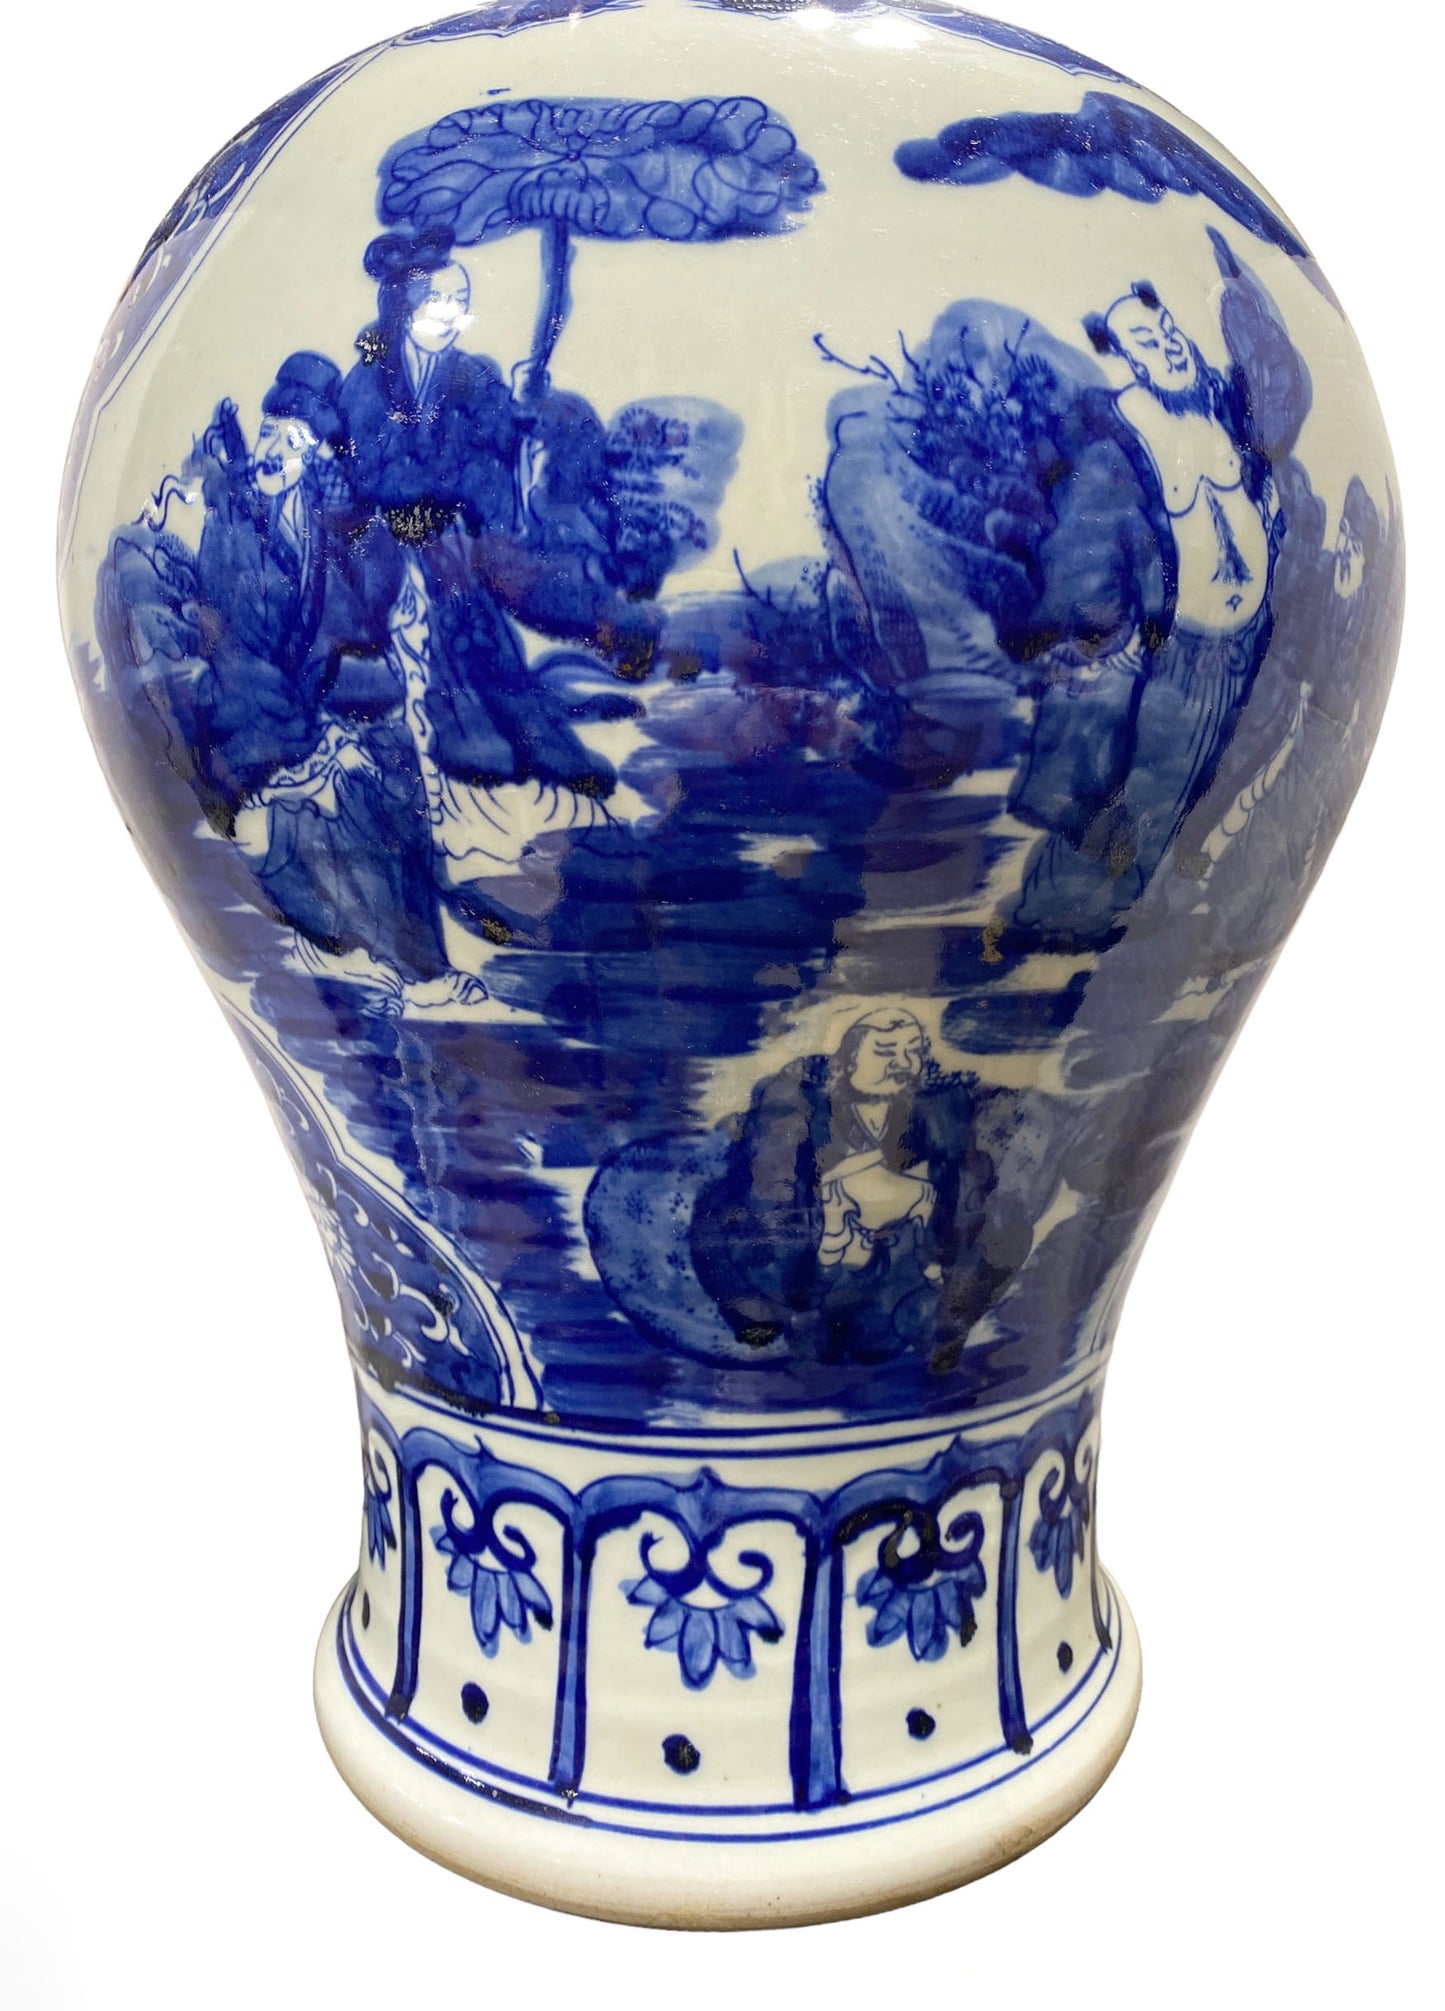 #5410 Superb Chinoiserie Chinese LG Blue and White Porcelain Jar/Vase  17" H